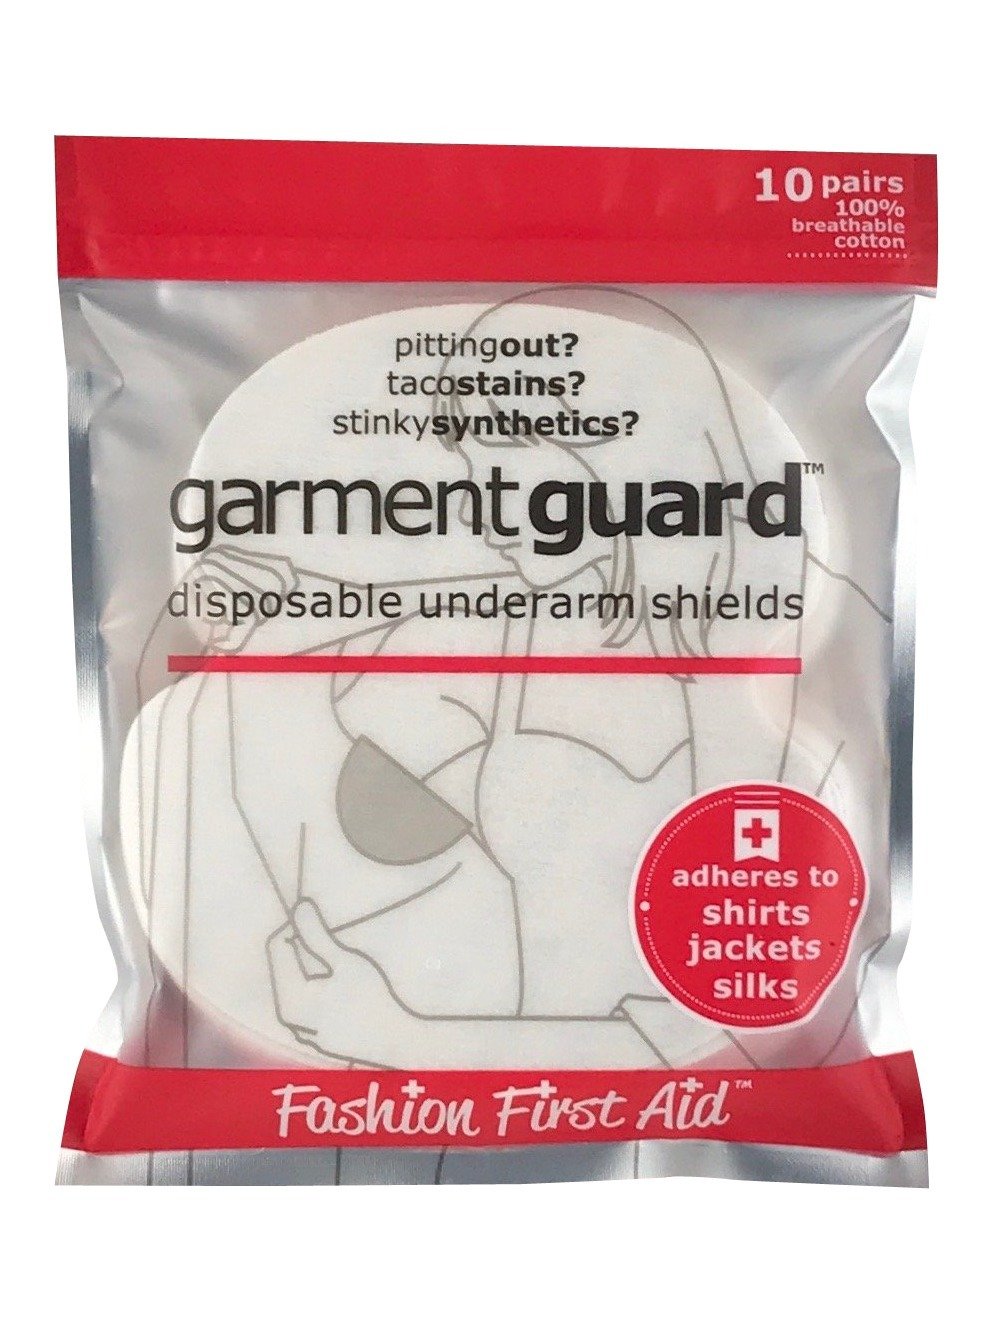 Garment Guard: the original cotton disposable adhesive underarm